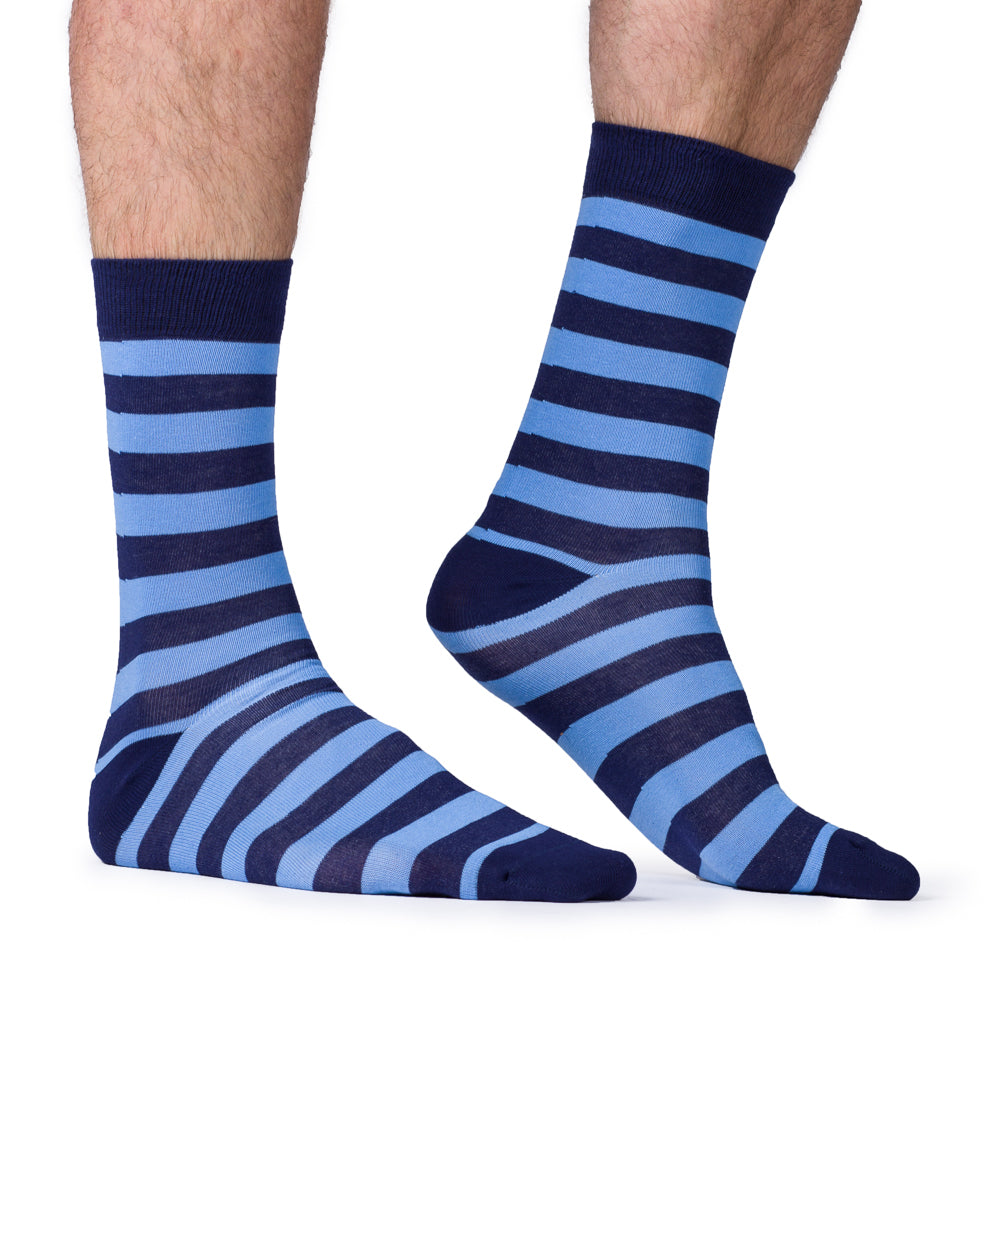 2t Patterned Socks 2 Pairs (mixed navy)